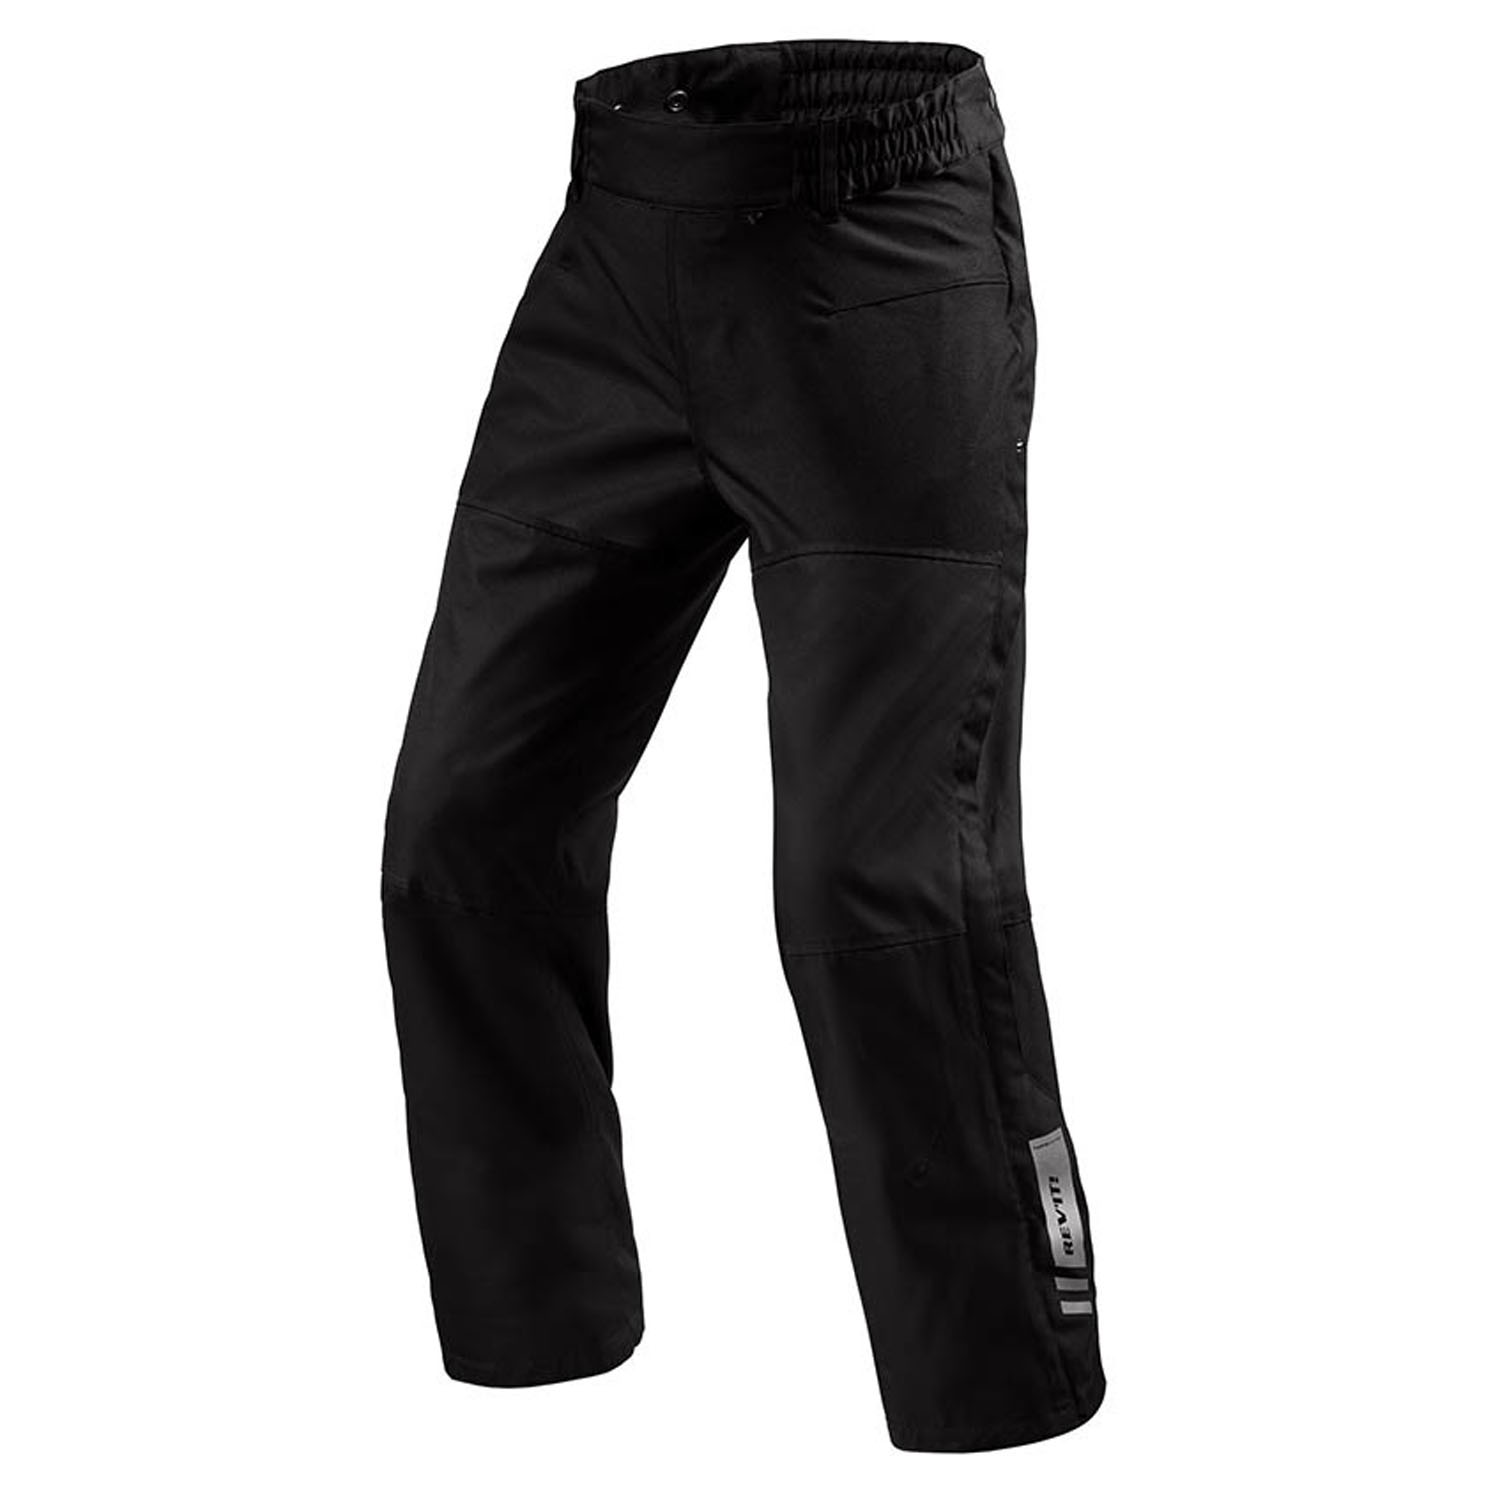 Image of REV'IT! Pants Axis 2 H2O Black Long Motorcycle Pants Talla L